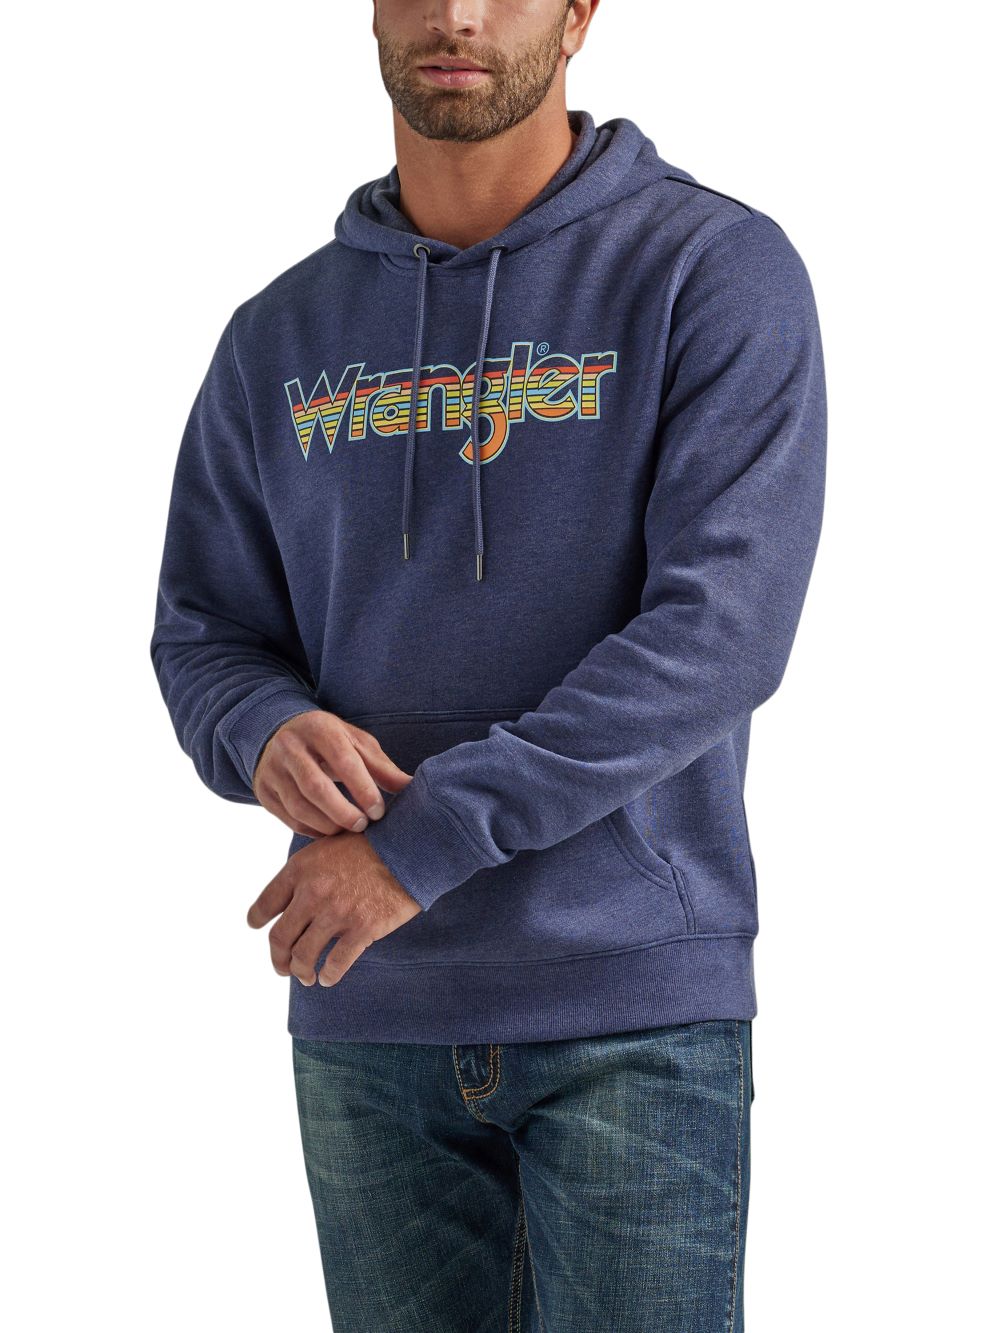 'Wrangler' Men's Multicolor Logo Pullover Hoodie - Denim Heather